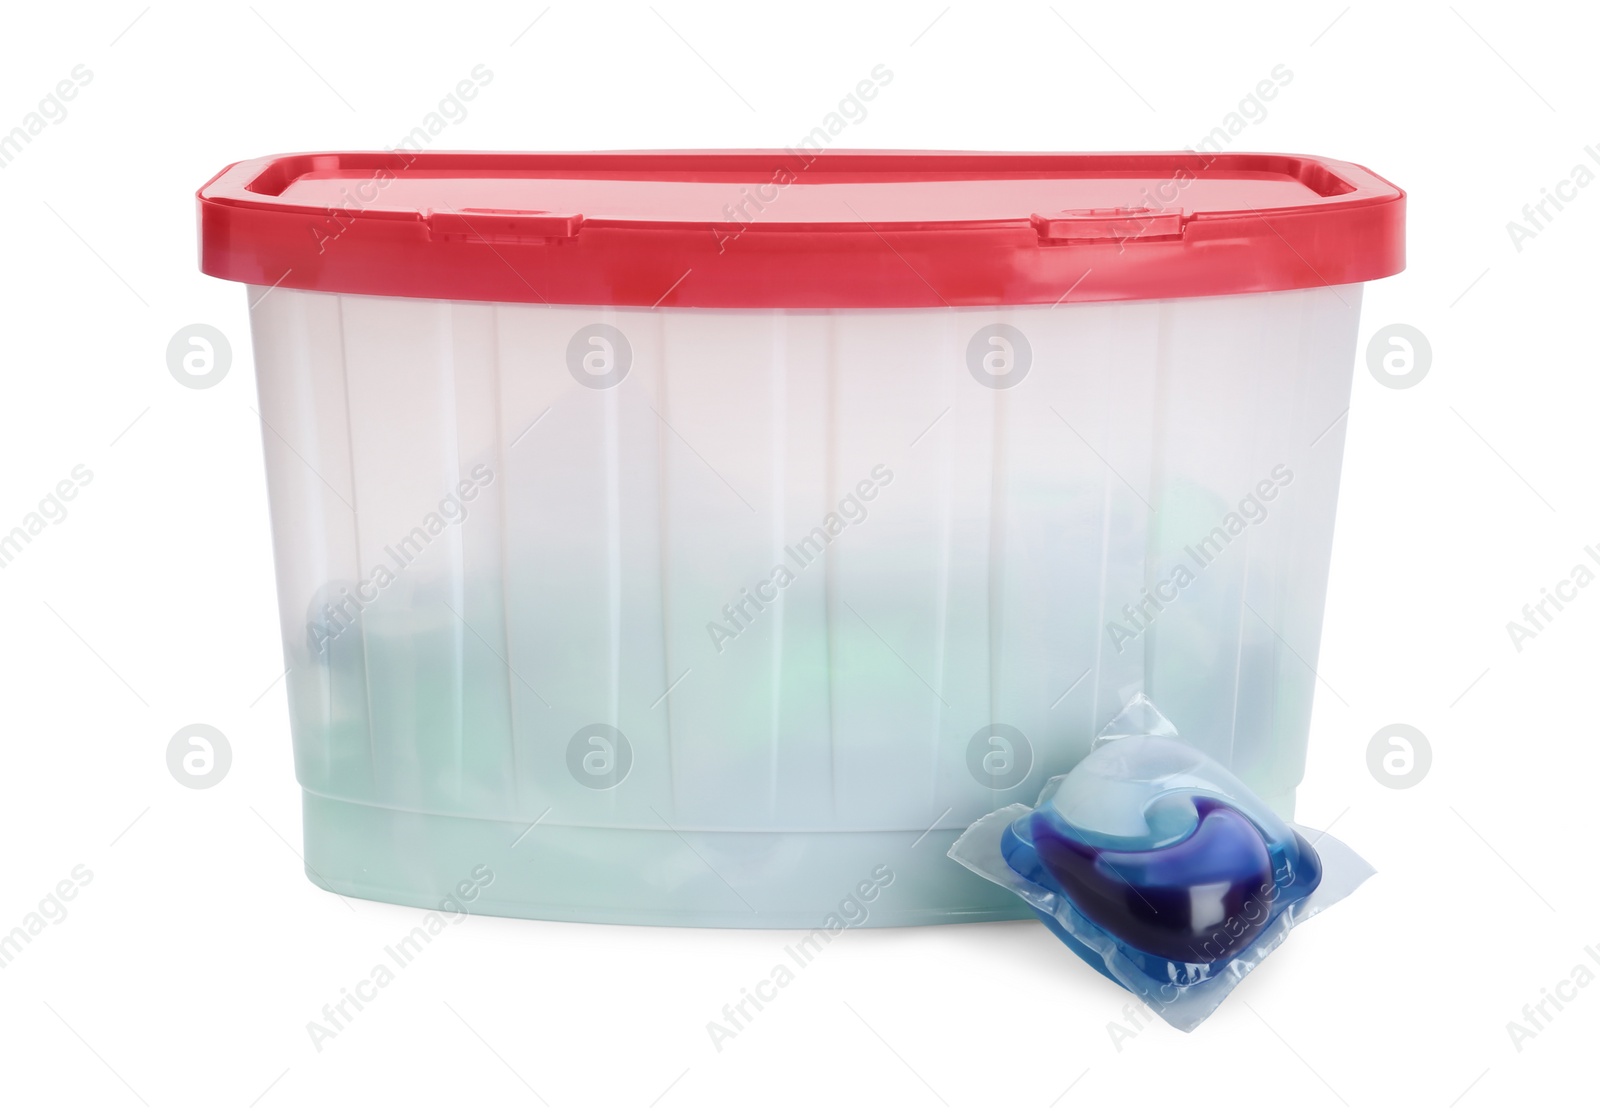 Photo of Laundry capsule and box on white background